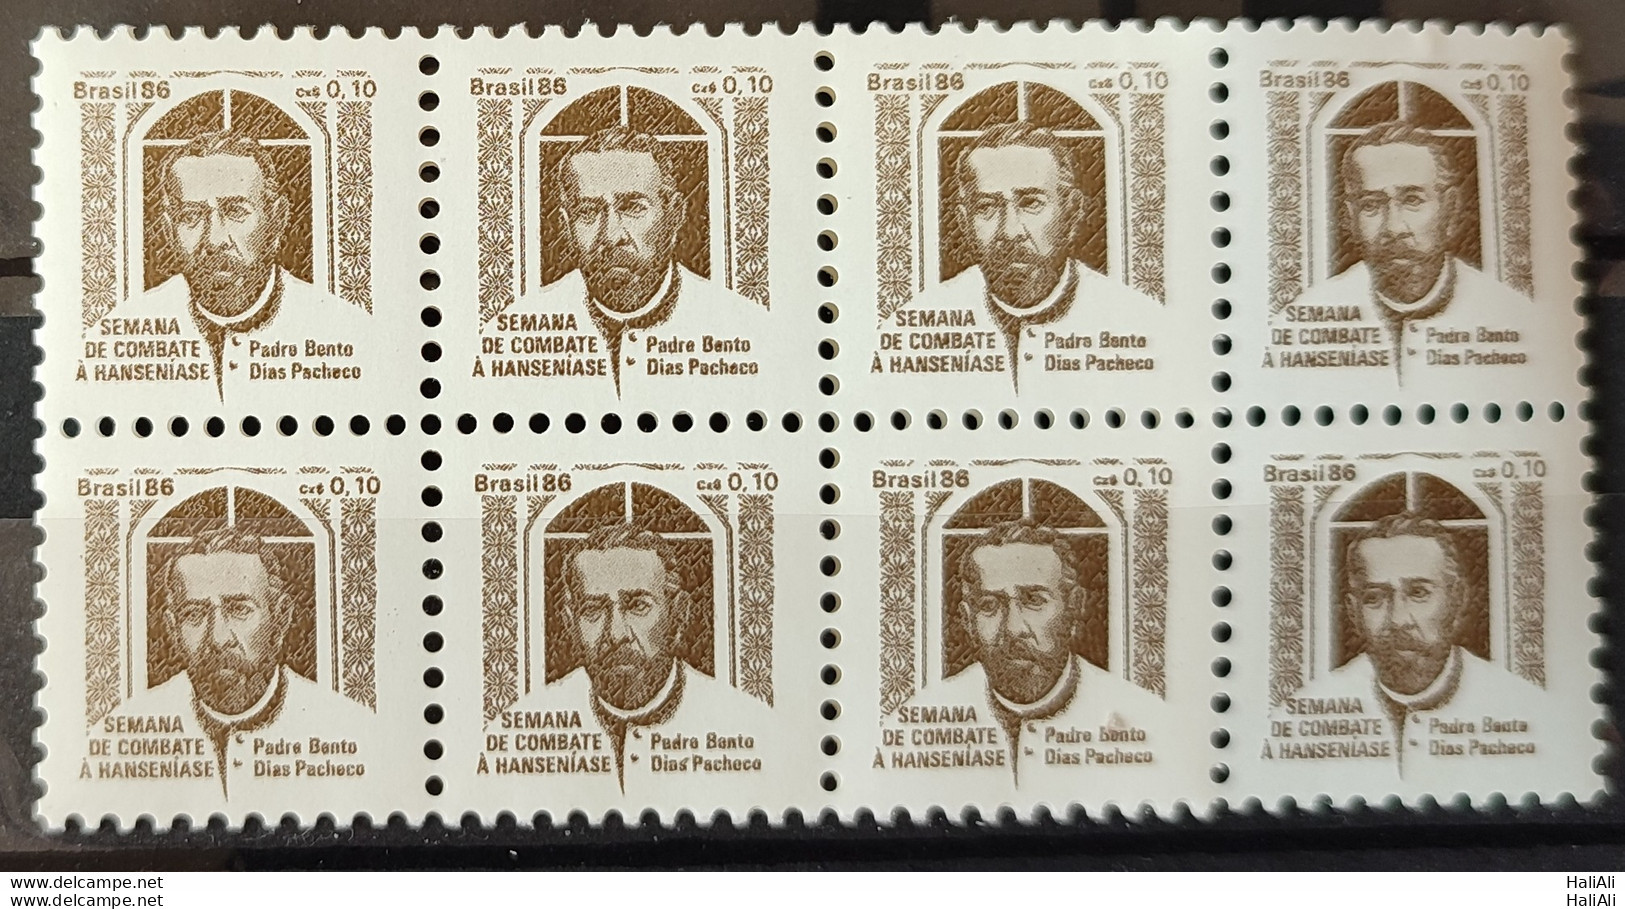 C 1538 Brazil Stamp Combat Against Hansen Hanseniasse Health Father Bento Religion 1986 H23 Octilha.jpg - Unused Stamps